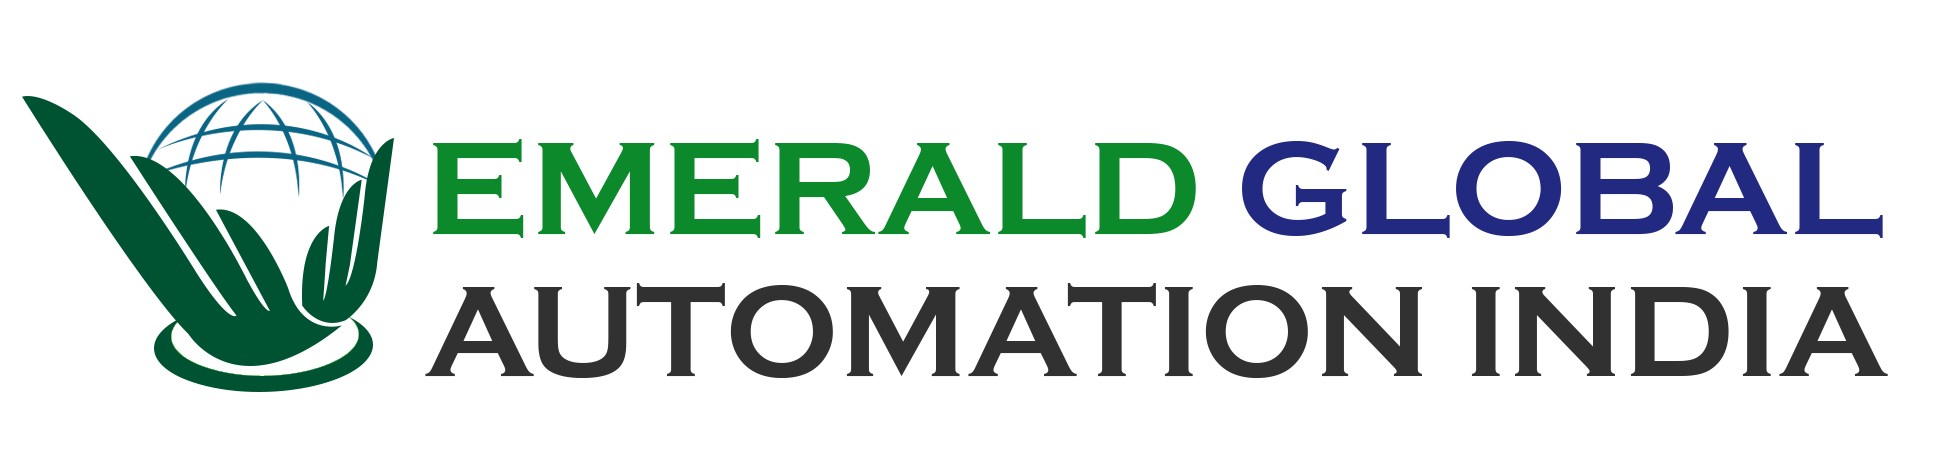 Emerald Global Automation India